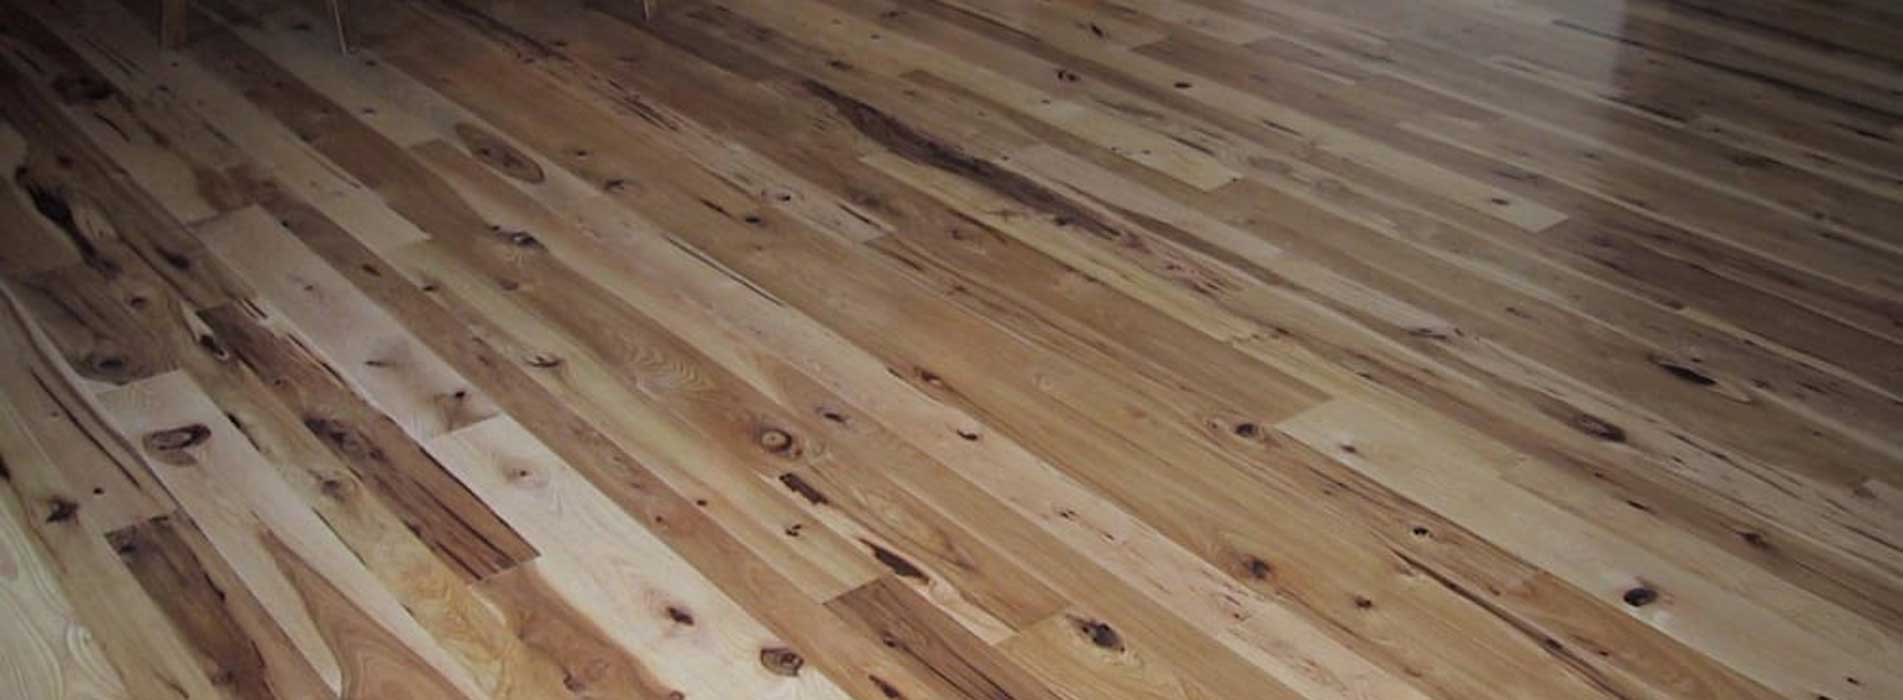 Anderson Floor Company Wood, Tru Line Hardwood Flooring And Dust Free Resurfacing Kit